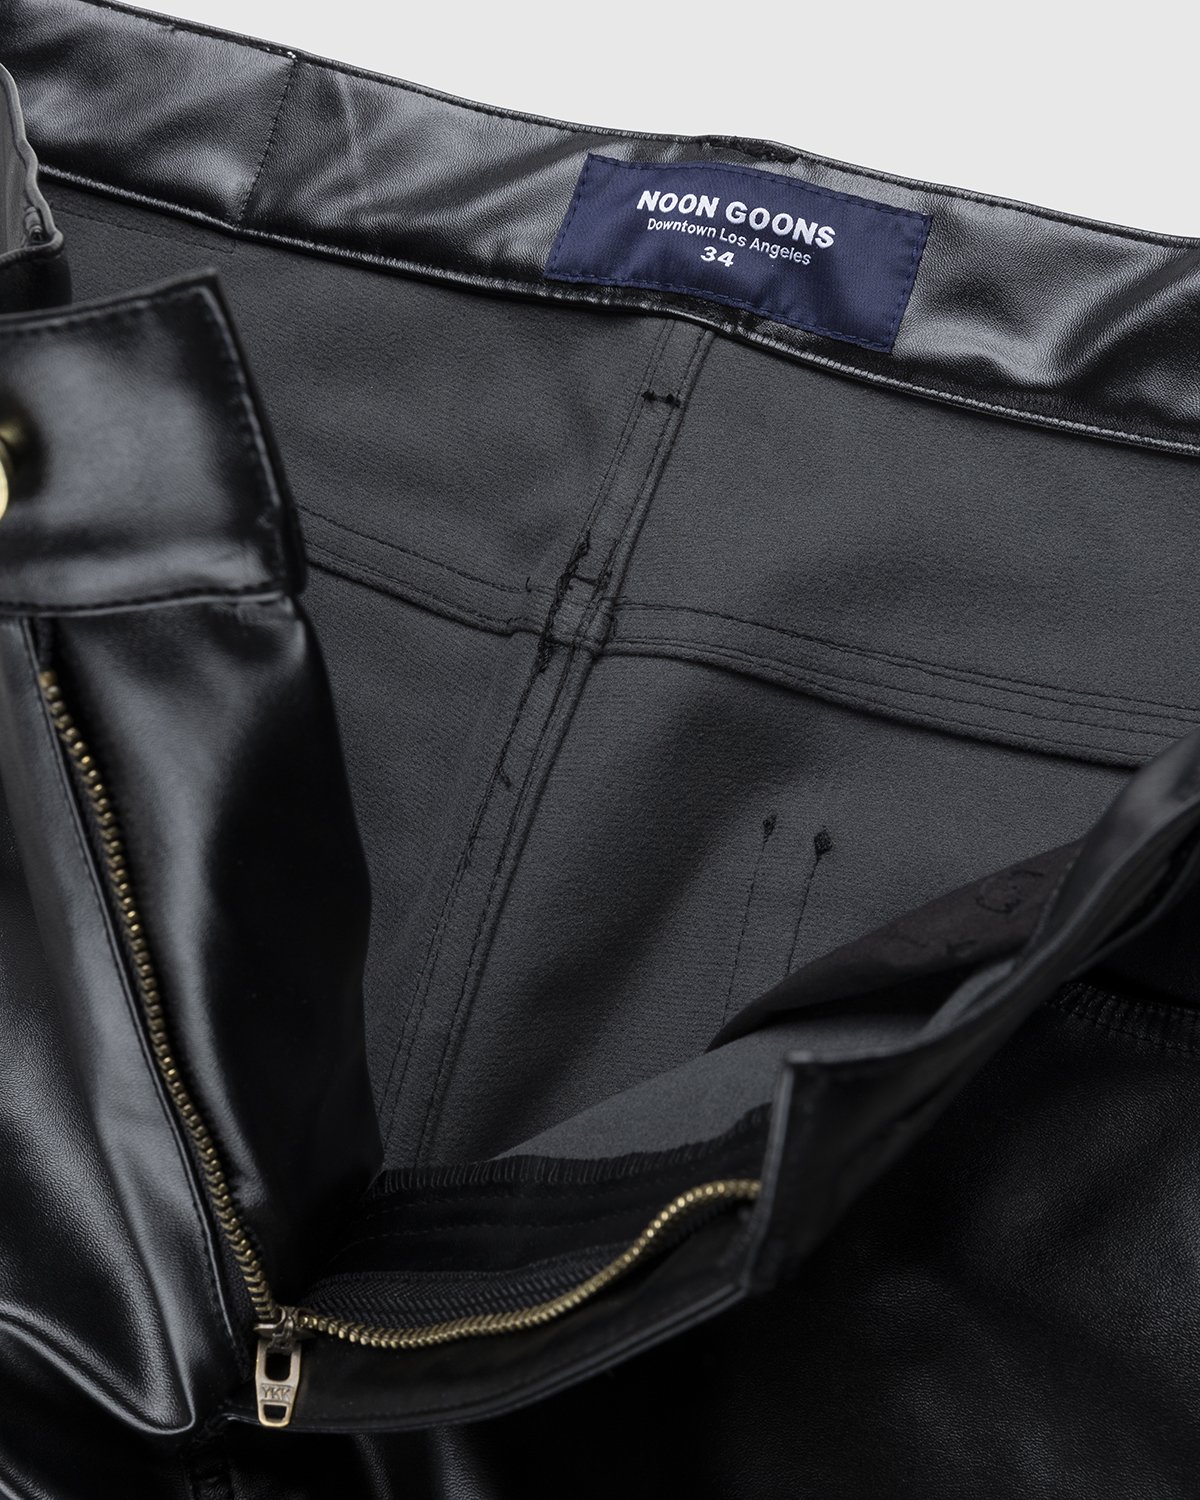 Noon Goons - Series Leather Pant Black - Clothing - Black - Image 5